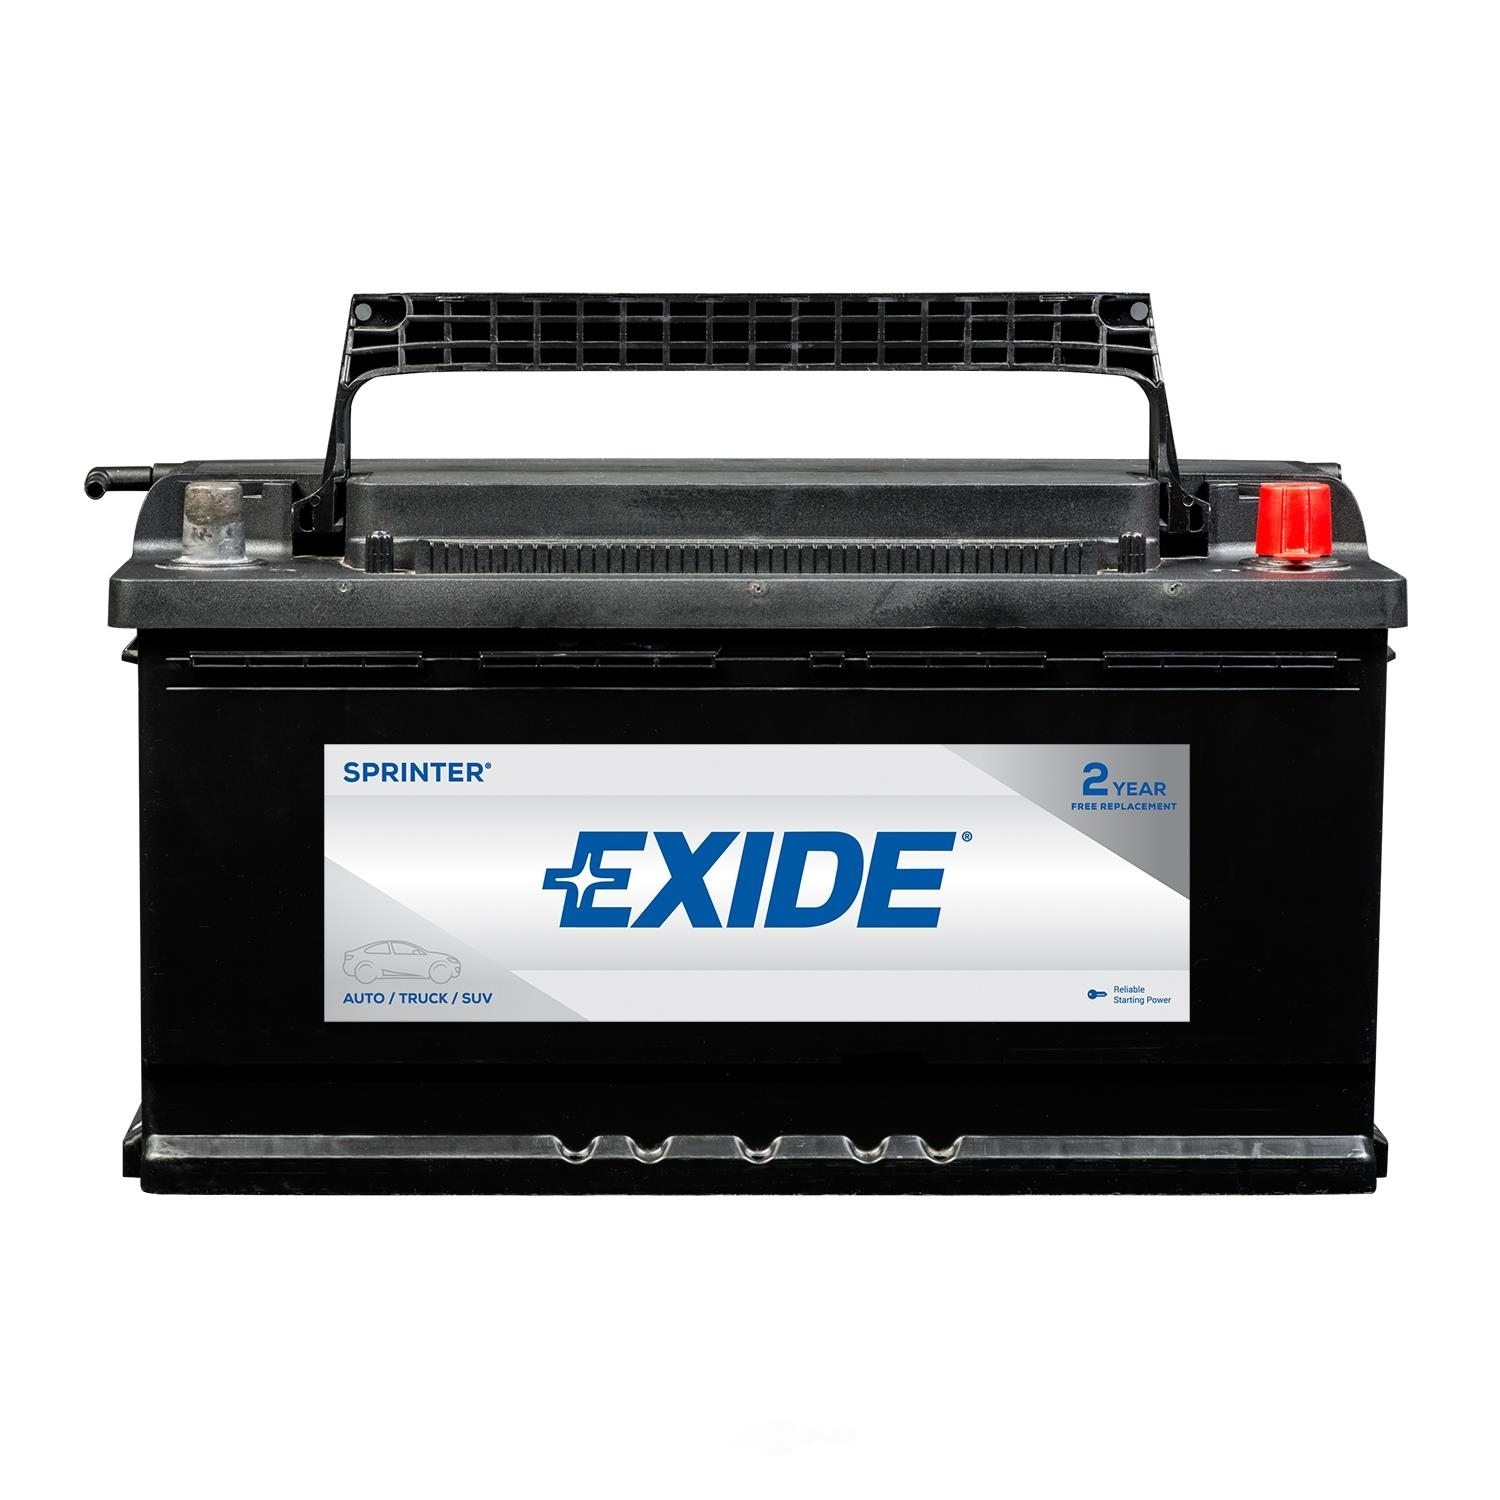 EXIDE BATTERIES - SPRINTER - CCA: 850 - EX1 S-H8/L5/49